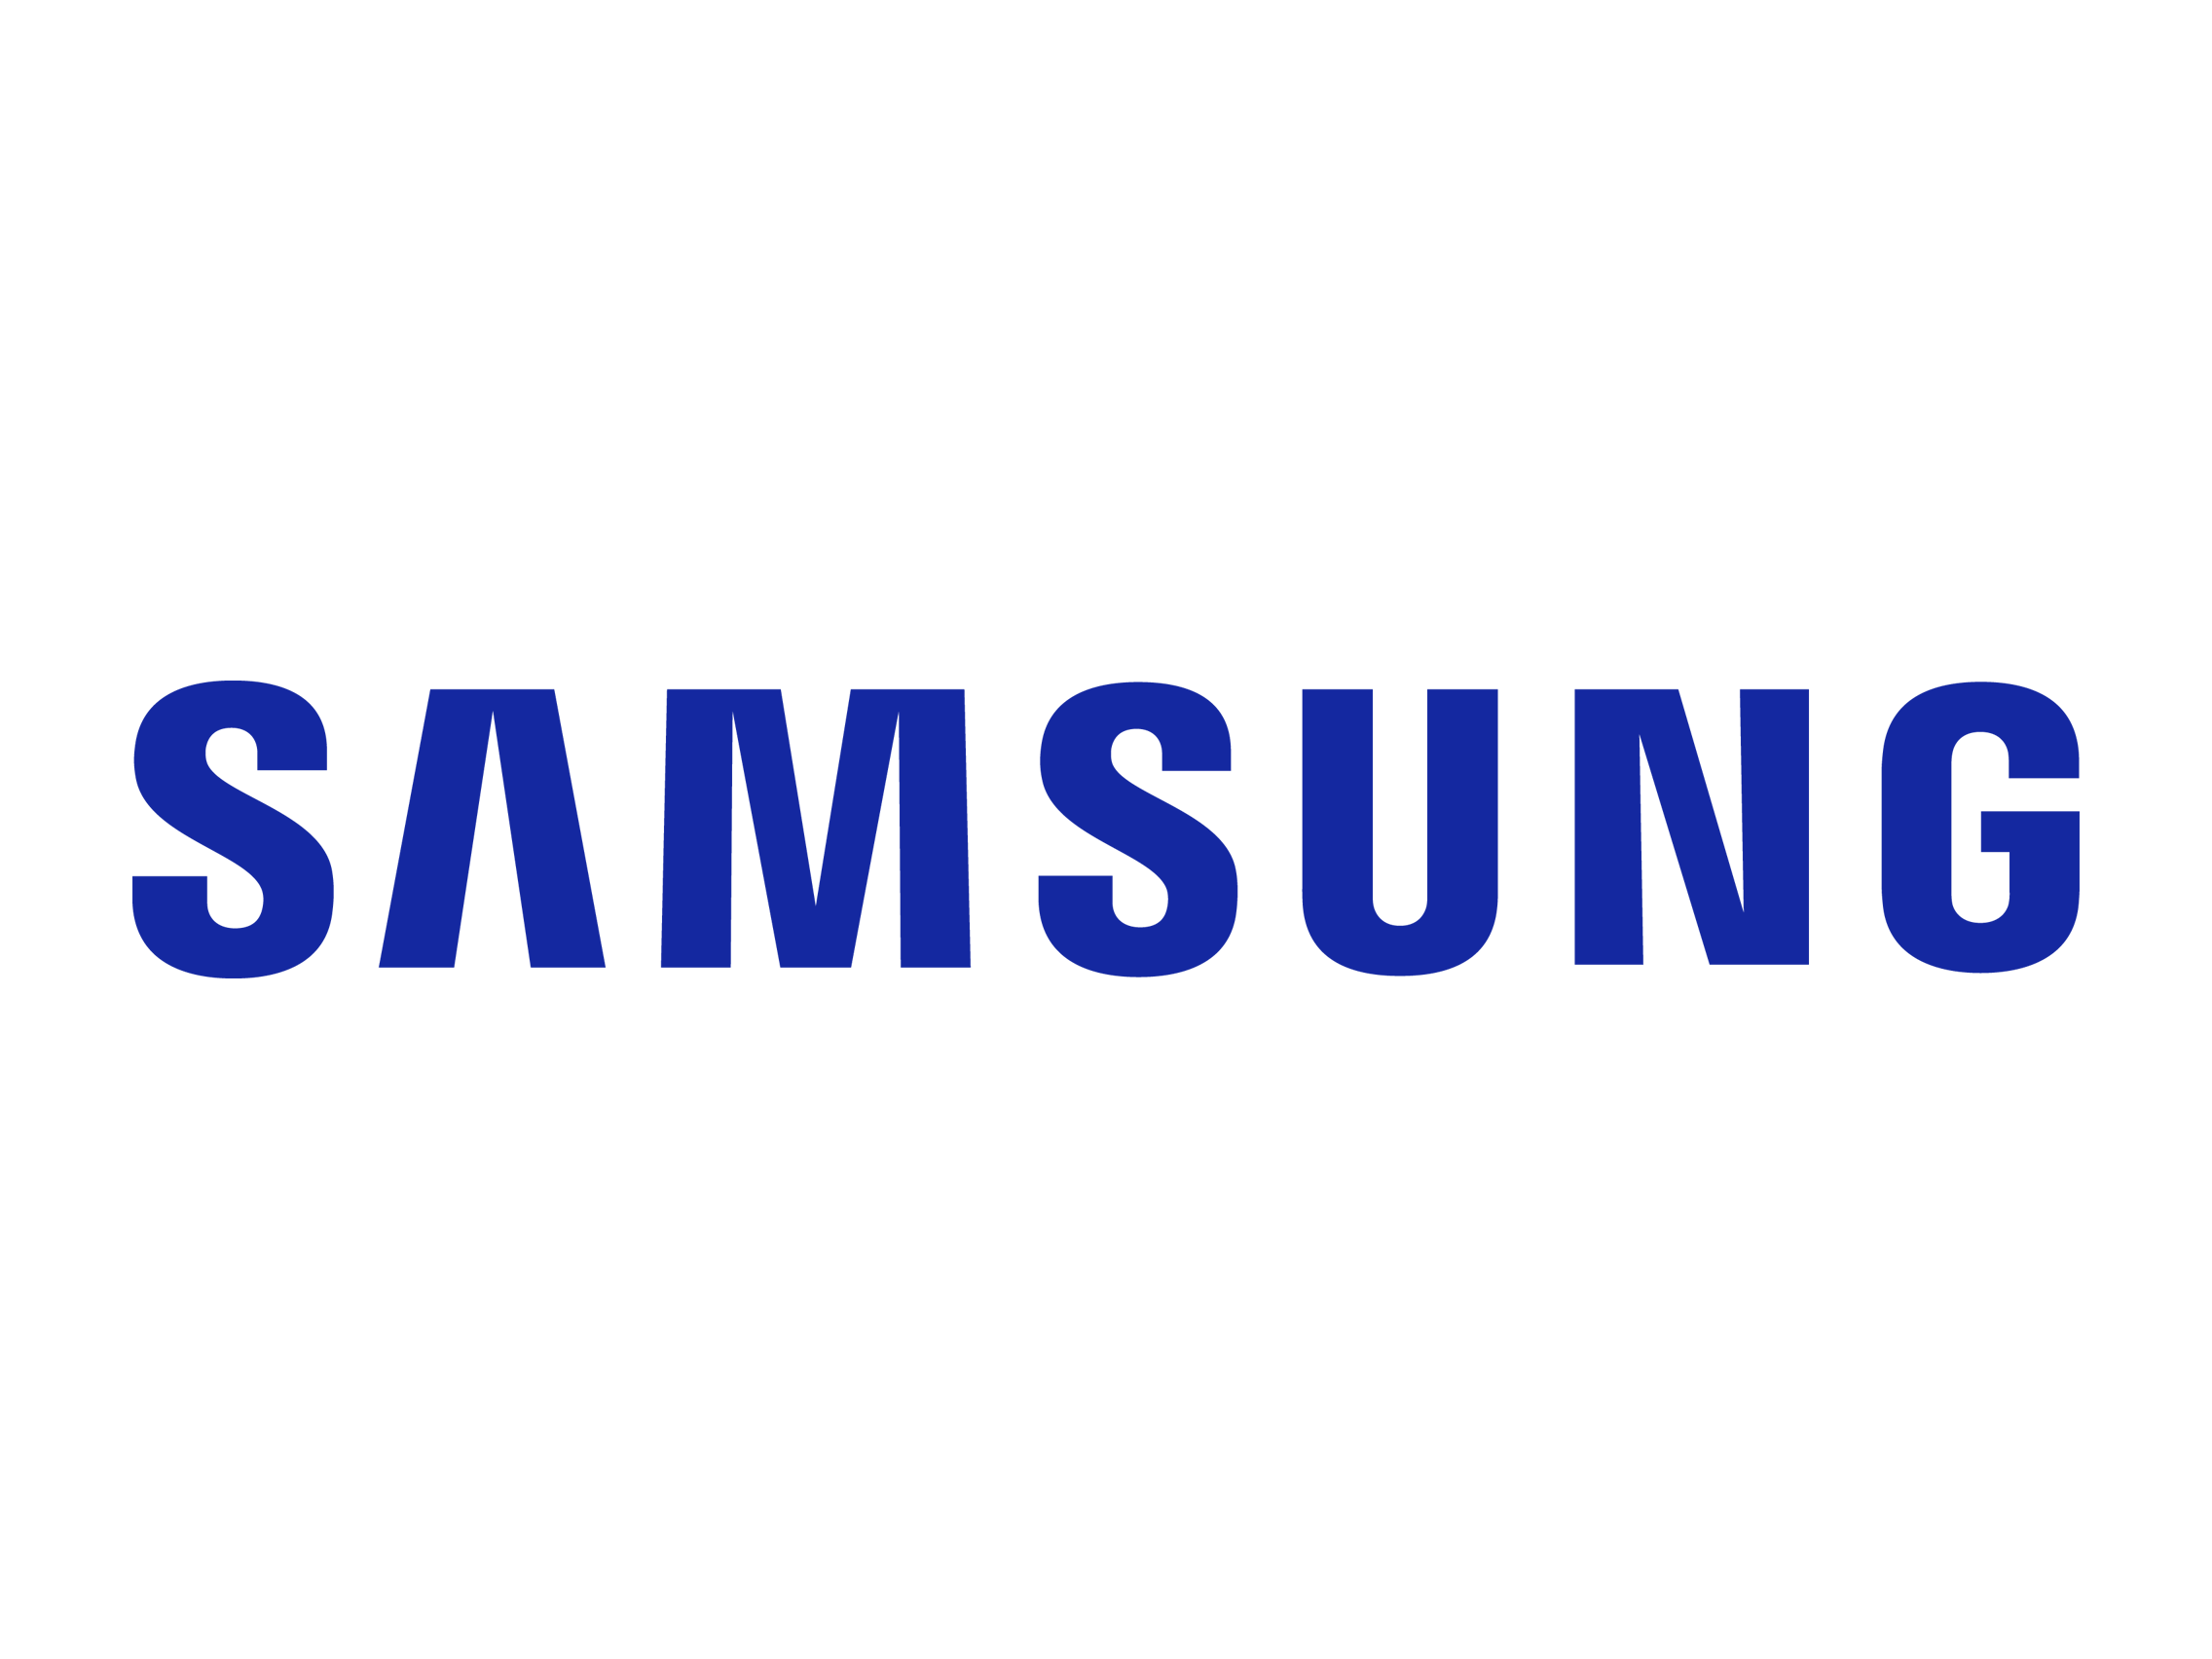 Samsung-logo-2015-Nobg.png